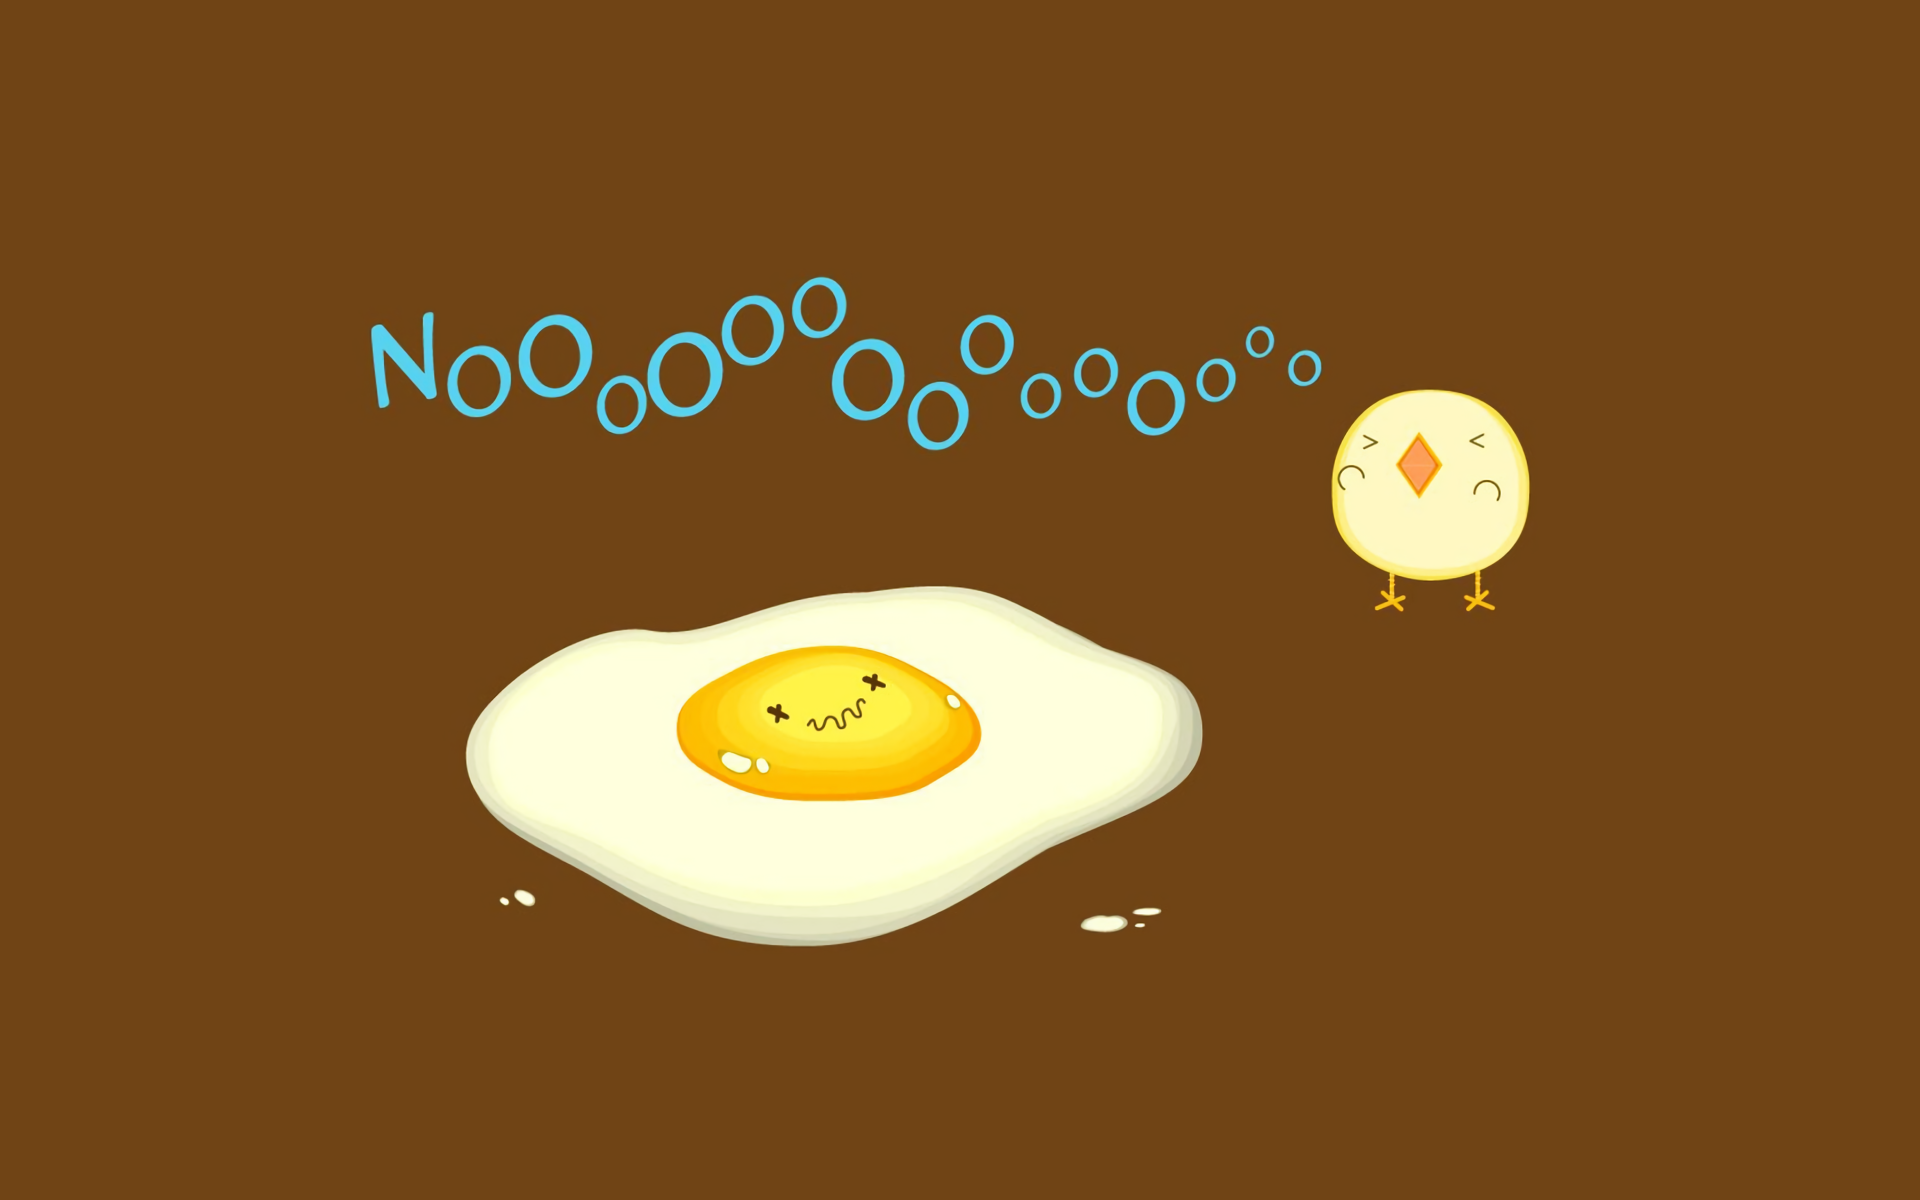 Eggs make the perfect breakfast